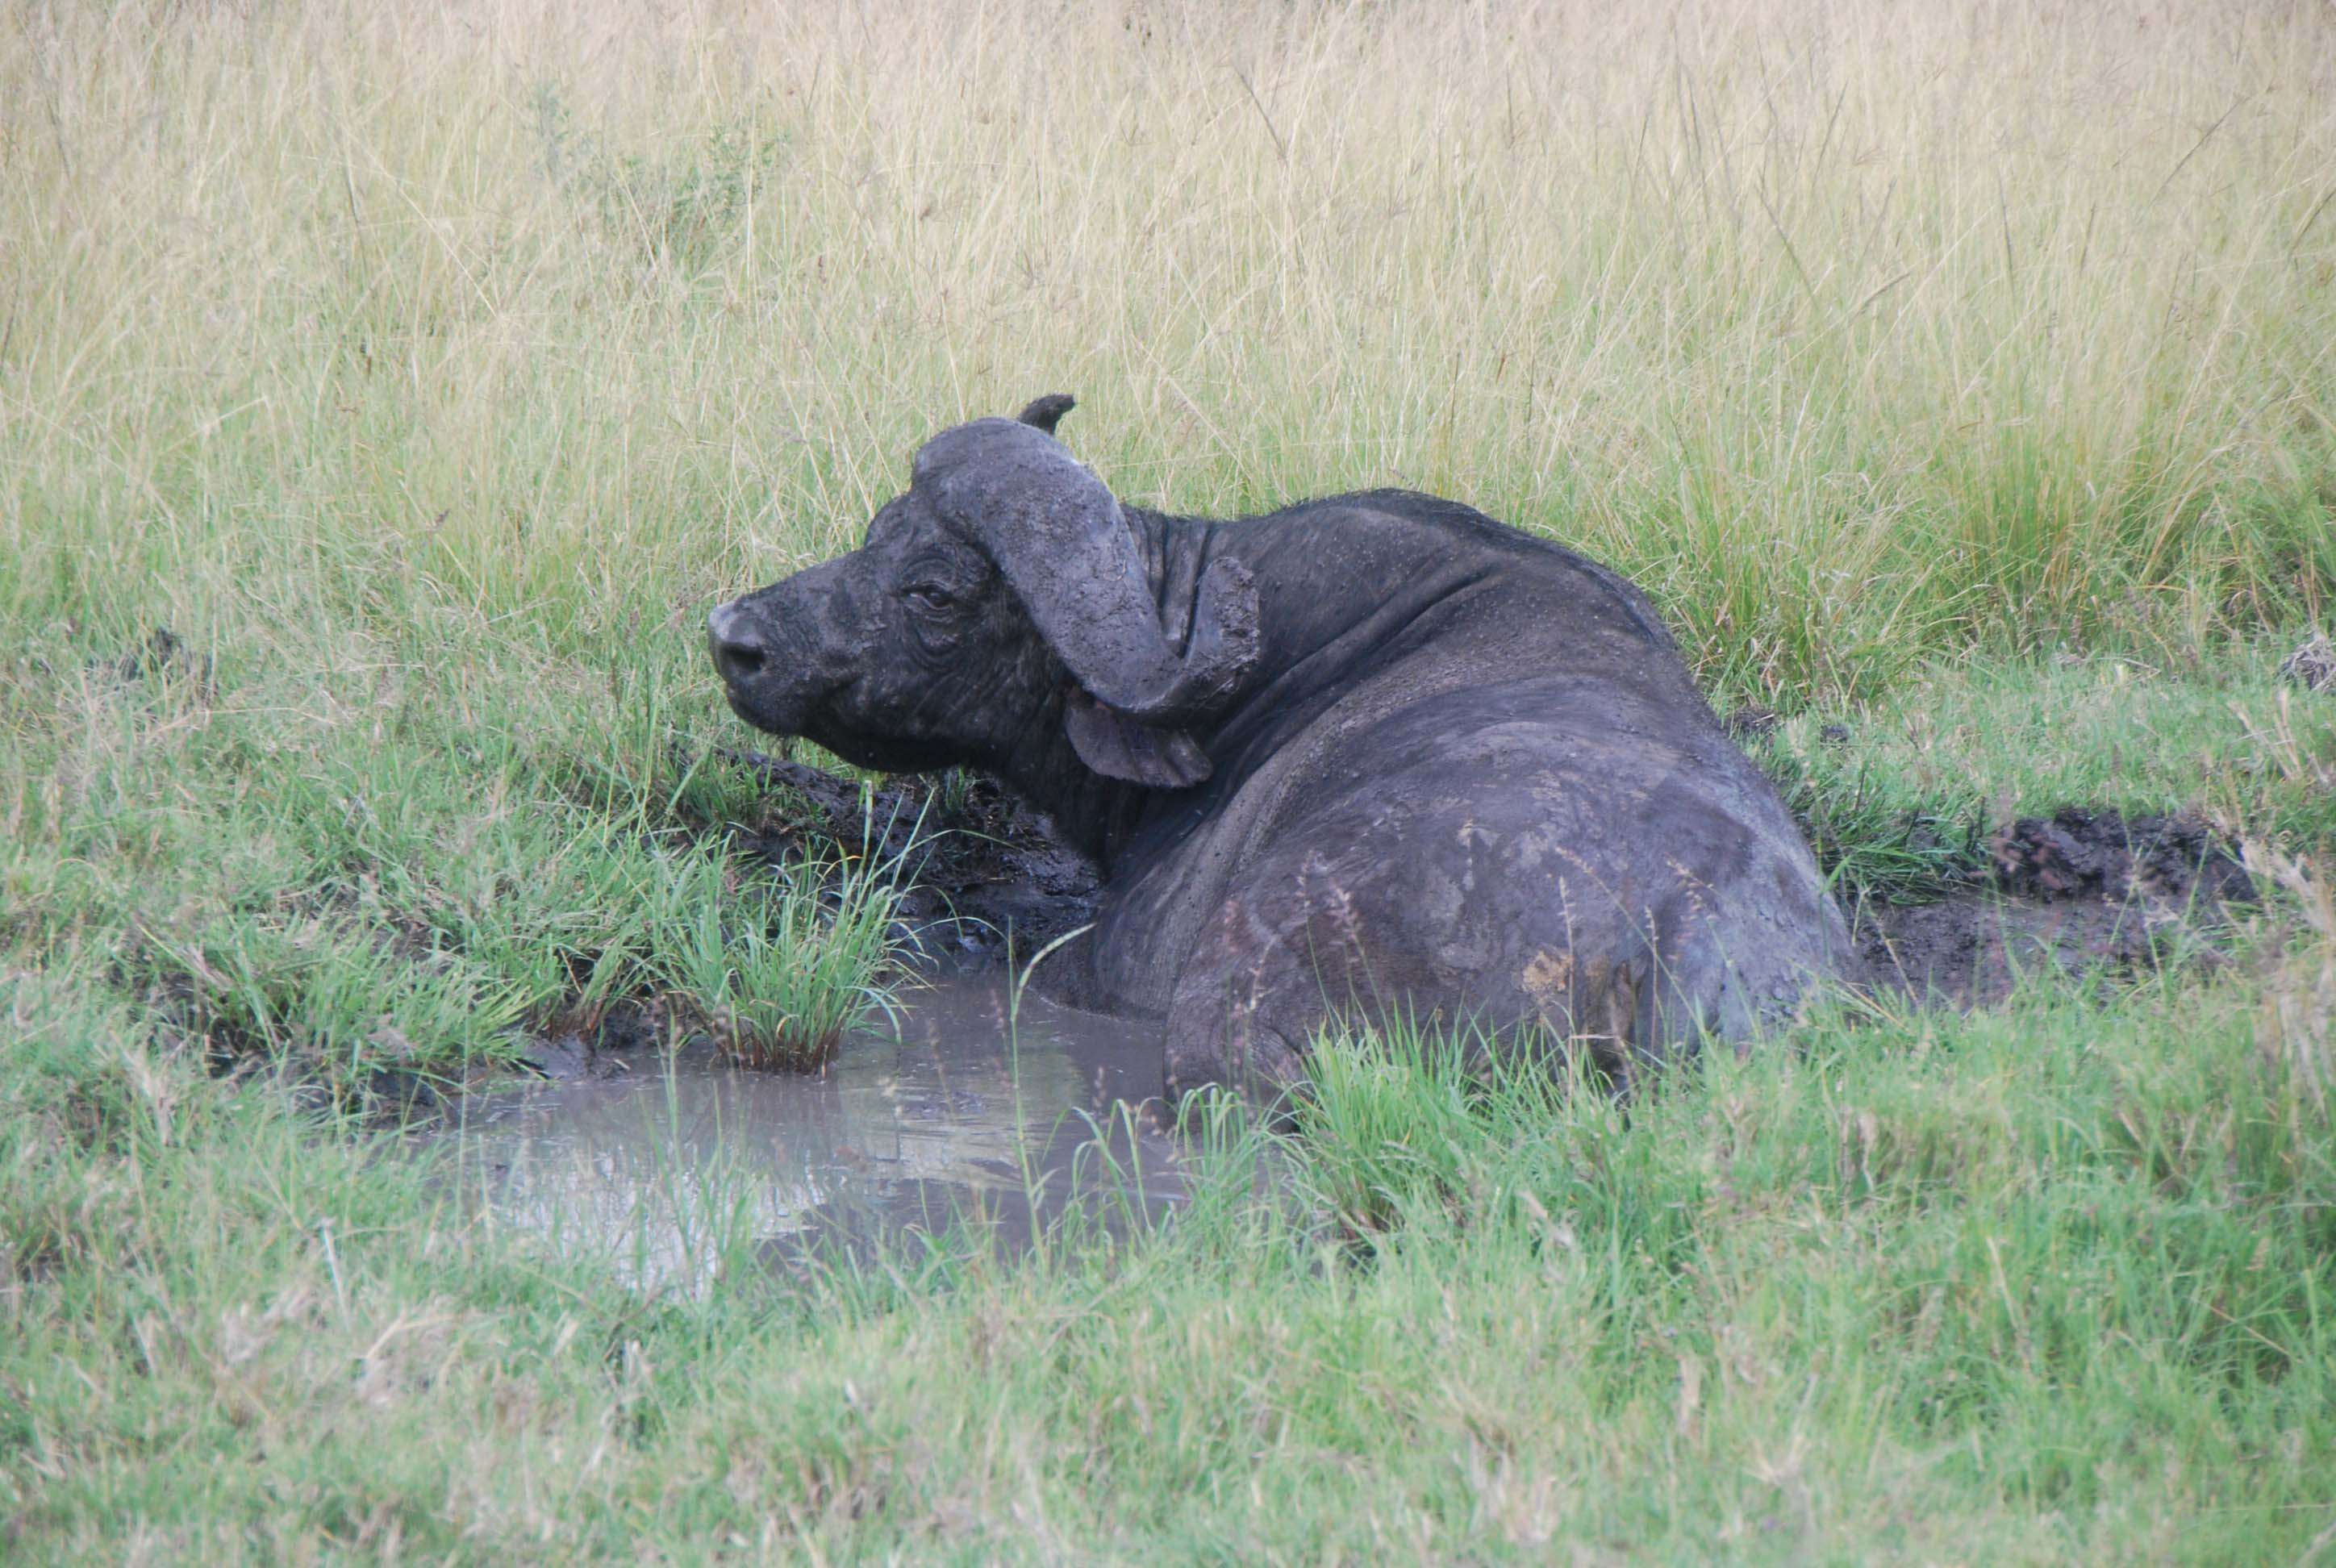 Nuestro primer safari - Regreso al Mara - Kenia (10)